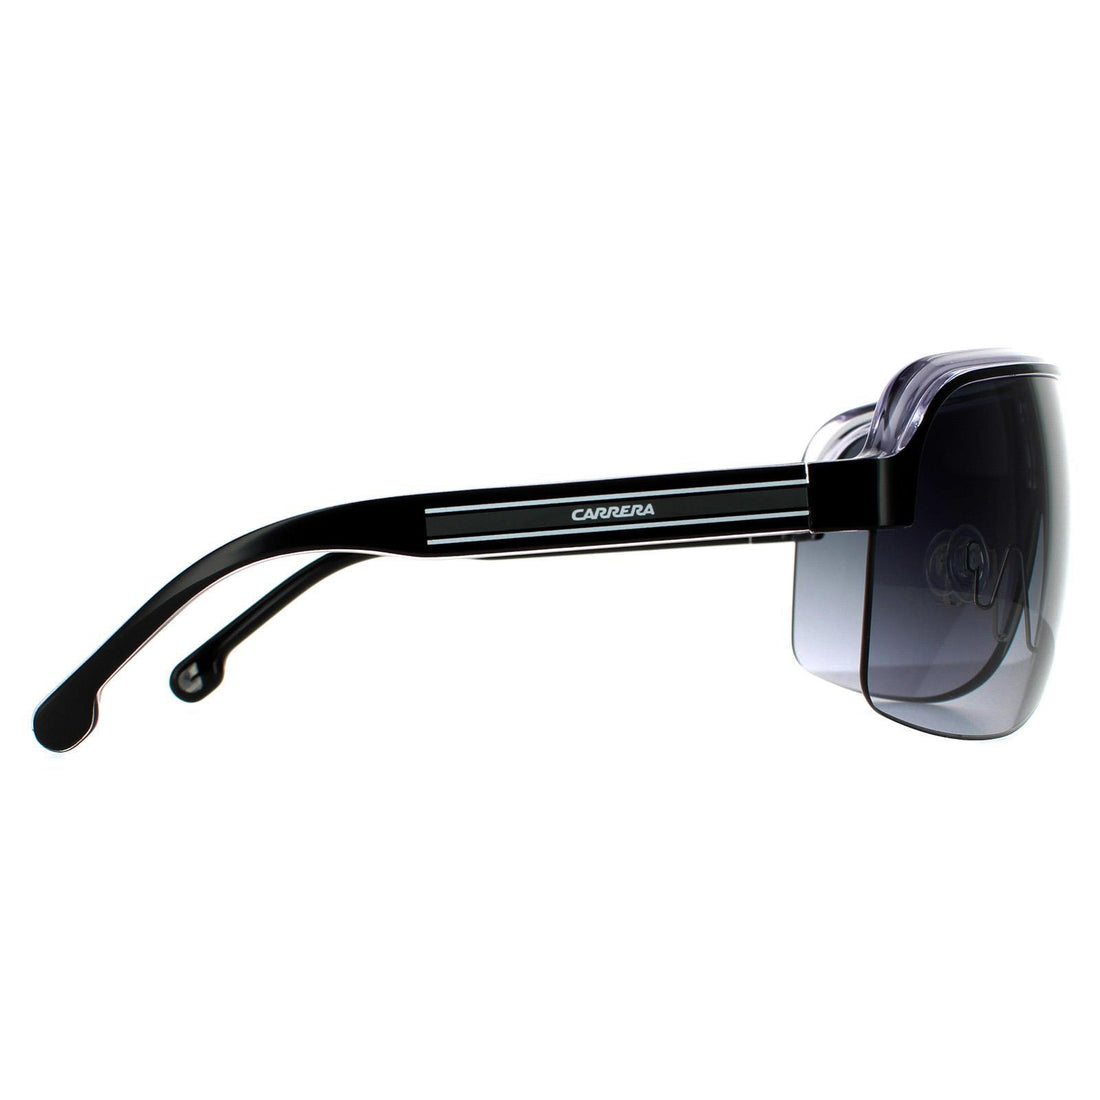 Carrera Sunglasses Topcar 1/N 80S 9O Black White Dark Grey Gradient